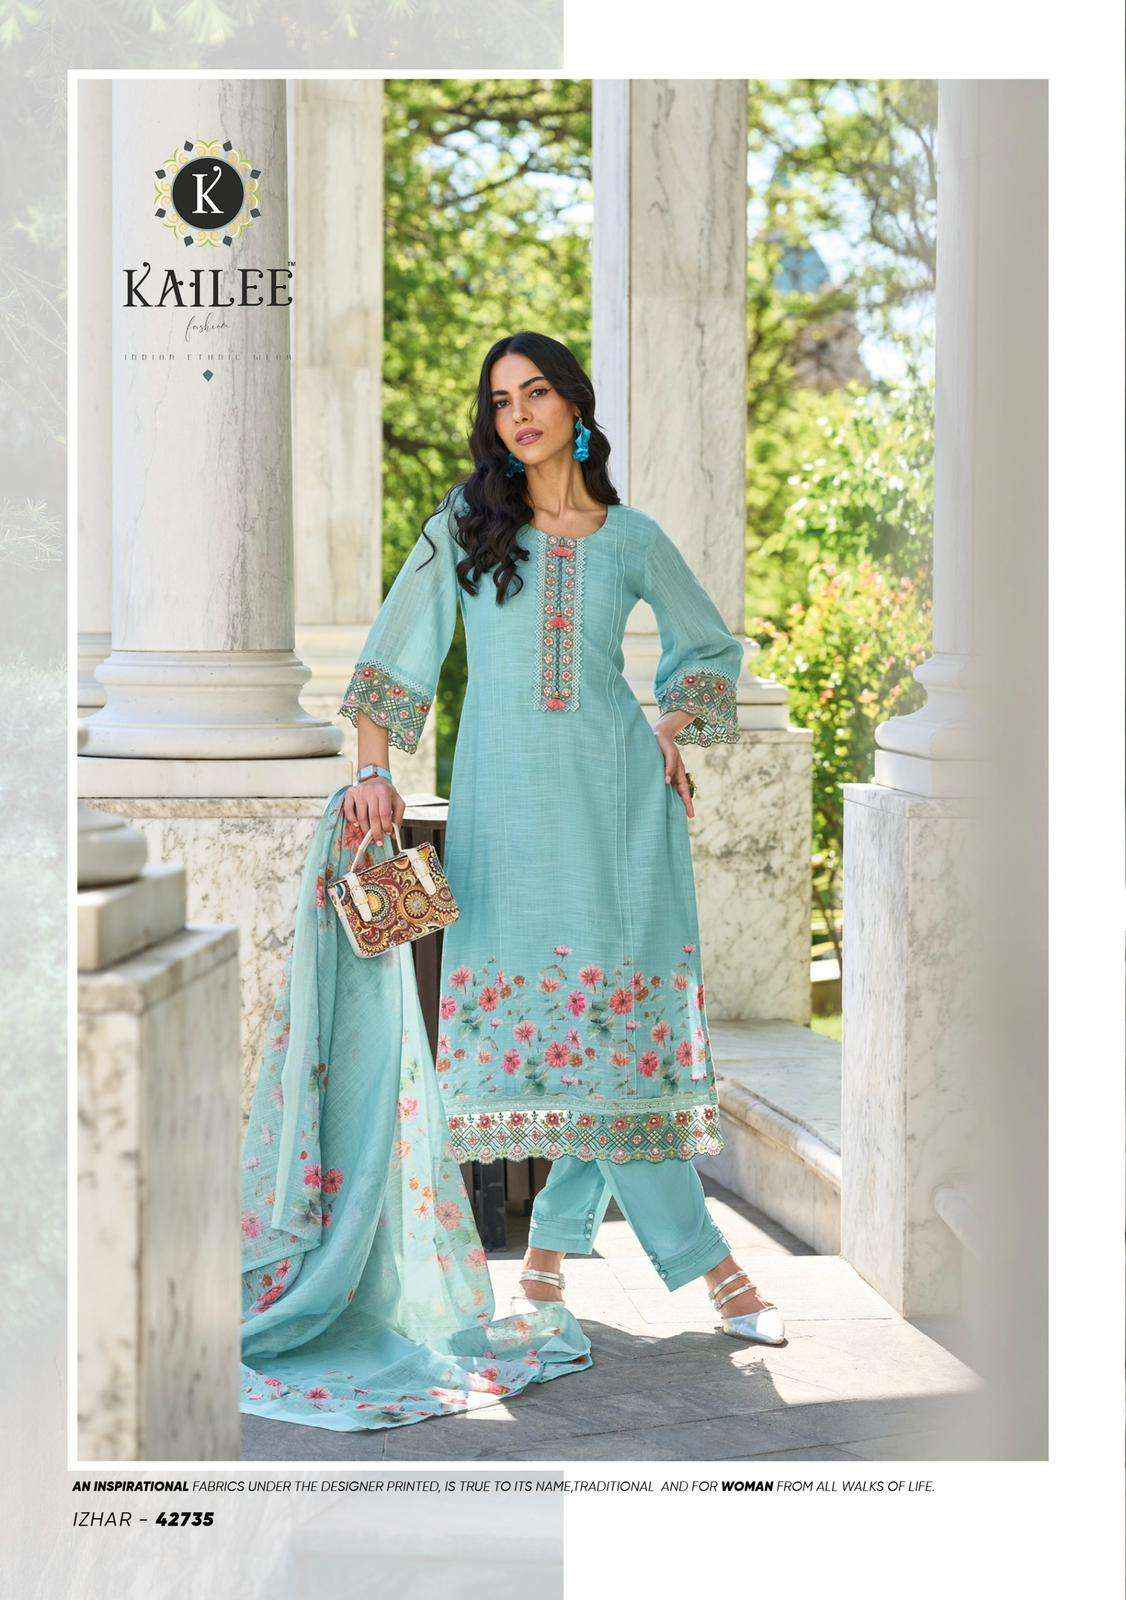 Kailee Fashion Izhaar Vol 3 Rayon Kurti Combo 6 pcs Catalogue